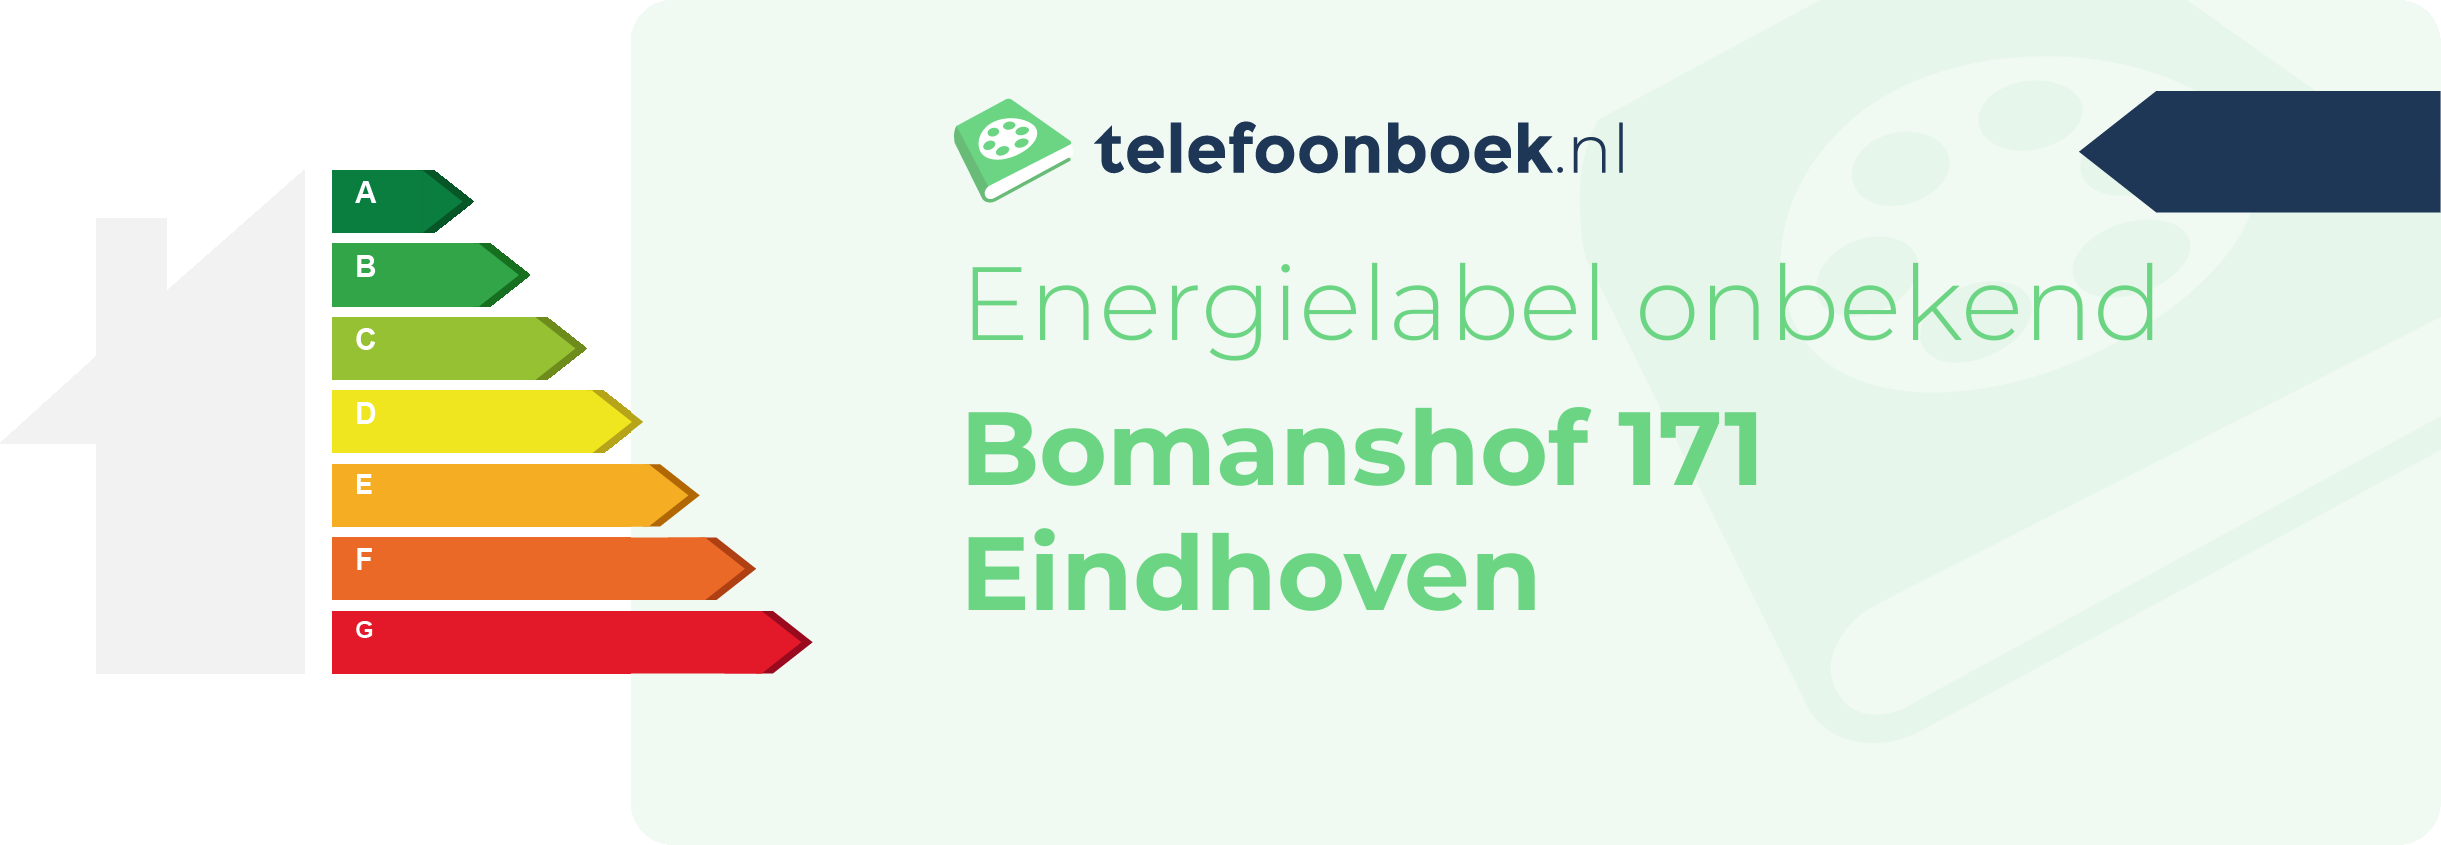 Energielabel Bomanshof 171 Eindhoven